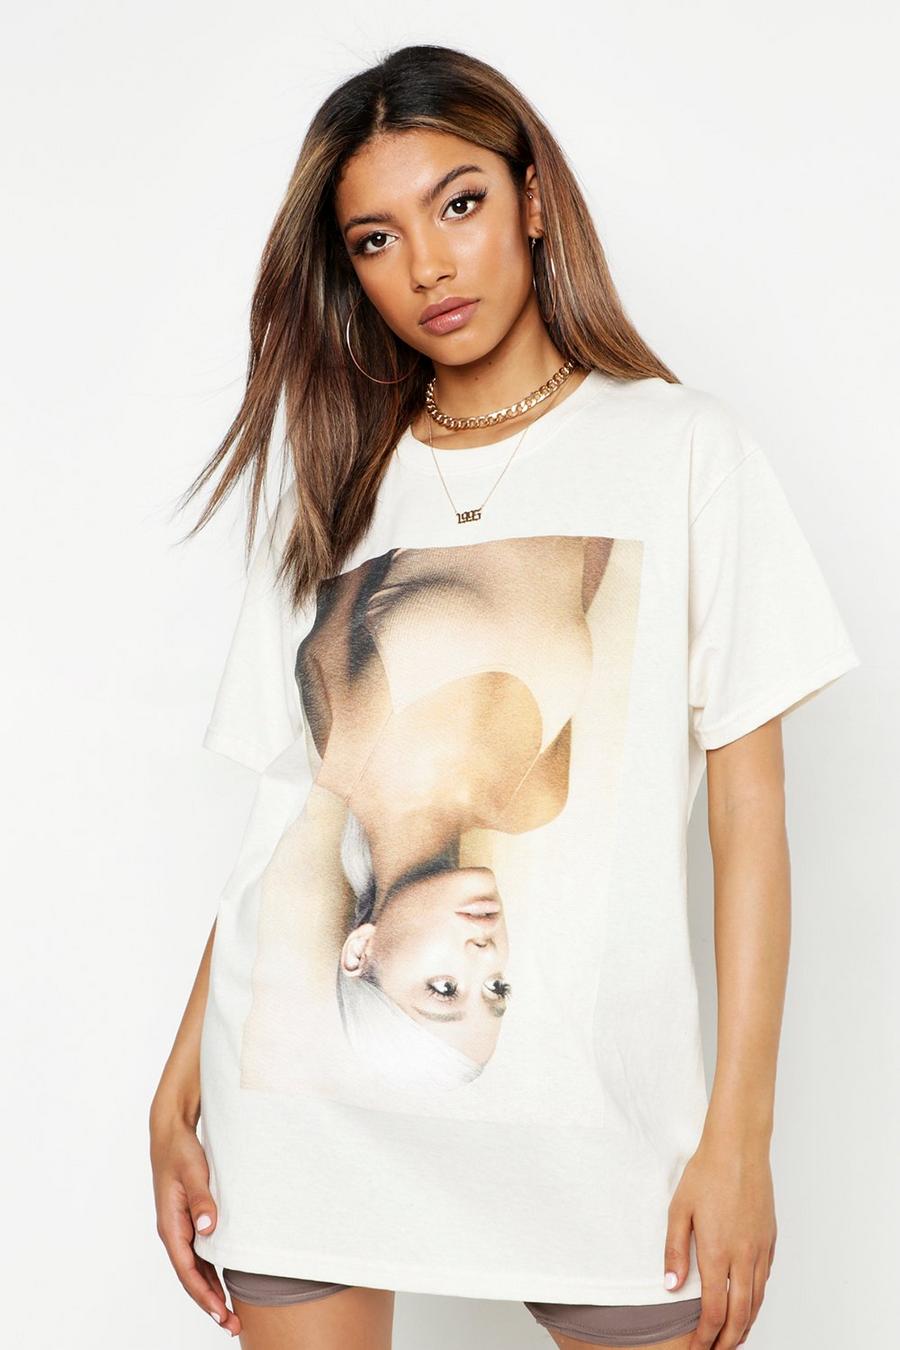 Stone Ariana Grande Oversized Licenced T-Shirt image number 1